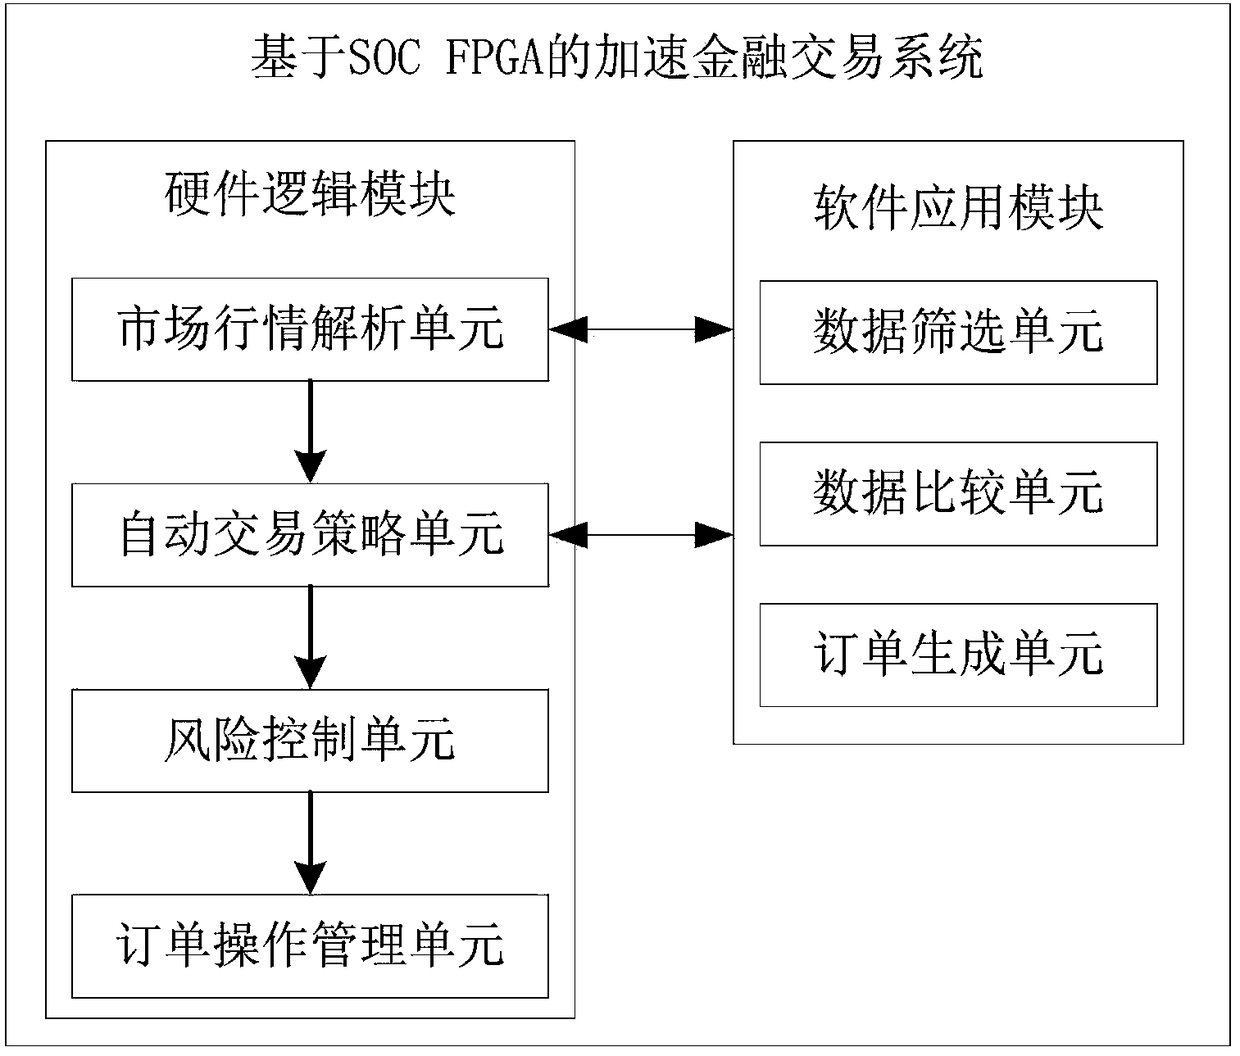 SOC FPGA-based financial transaction acceleration system and method